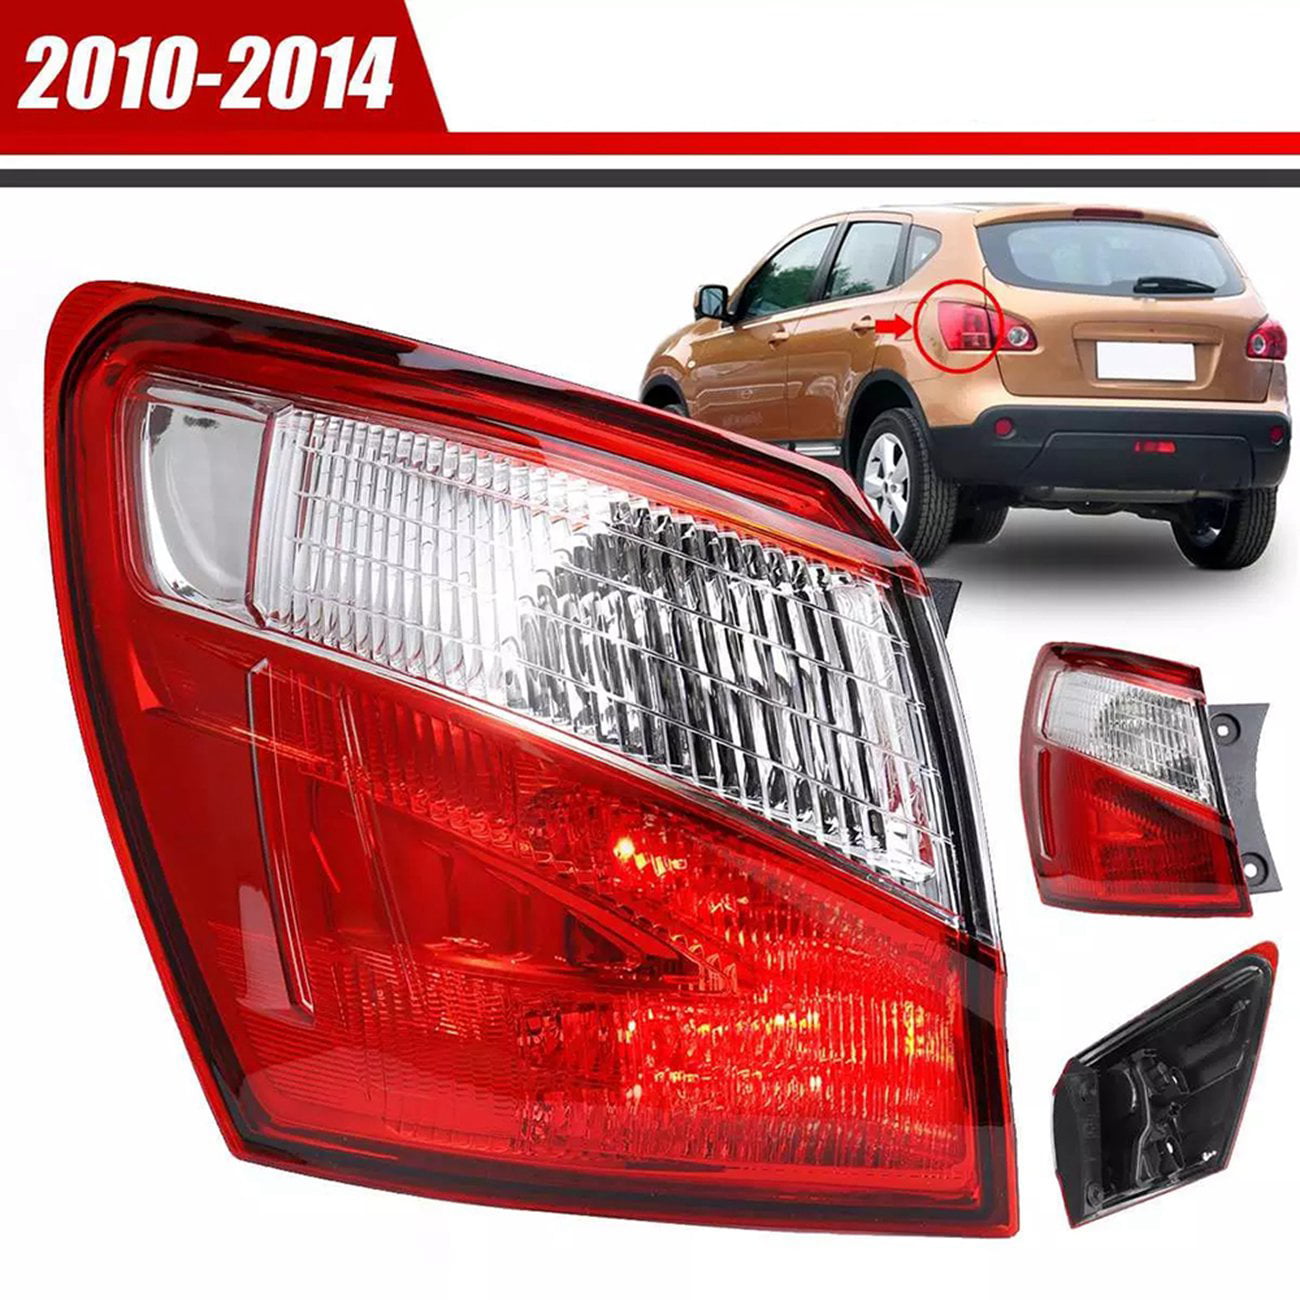 12V Right Side Rear Outer Tail LED Brake Light Lamp For Nissan Qashqai 2010-2014